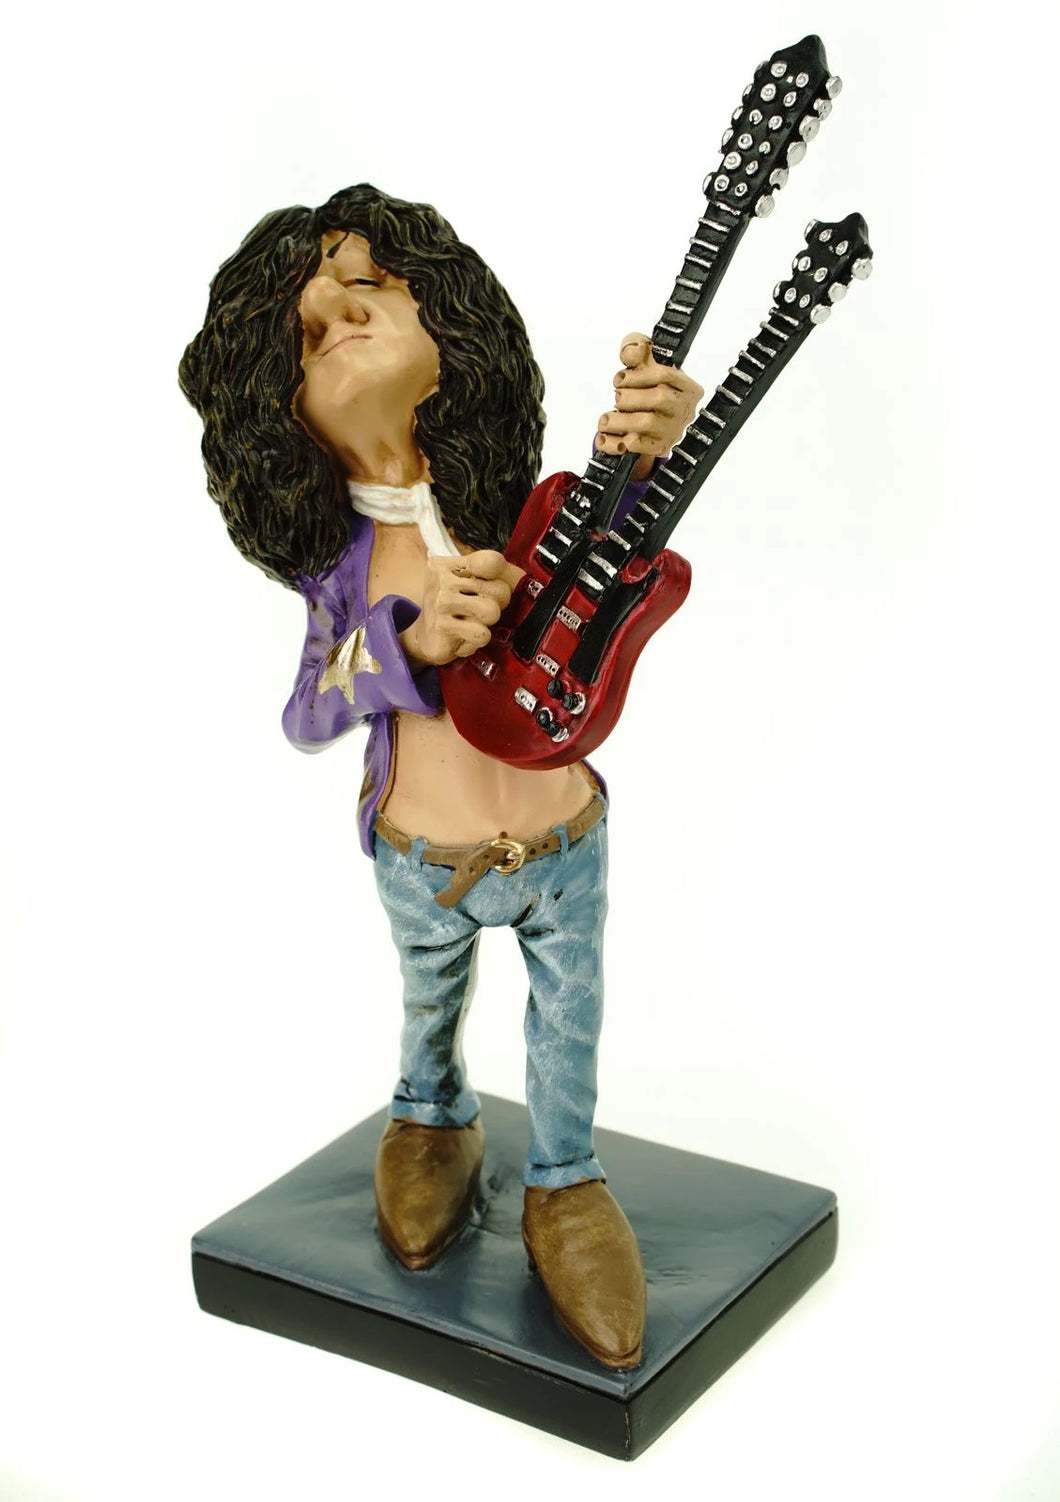 Jimmy Page Led Zeppelin Figurine Vogler by Warren Stratford